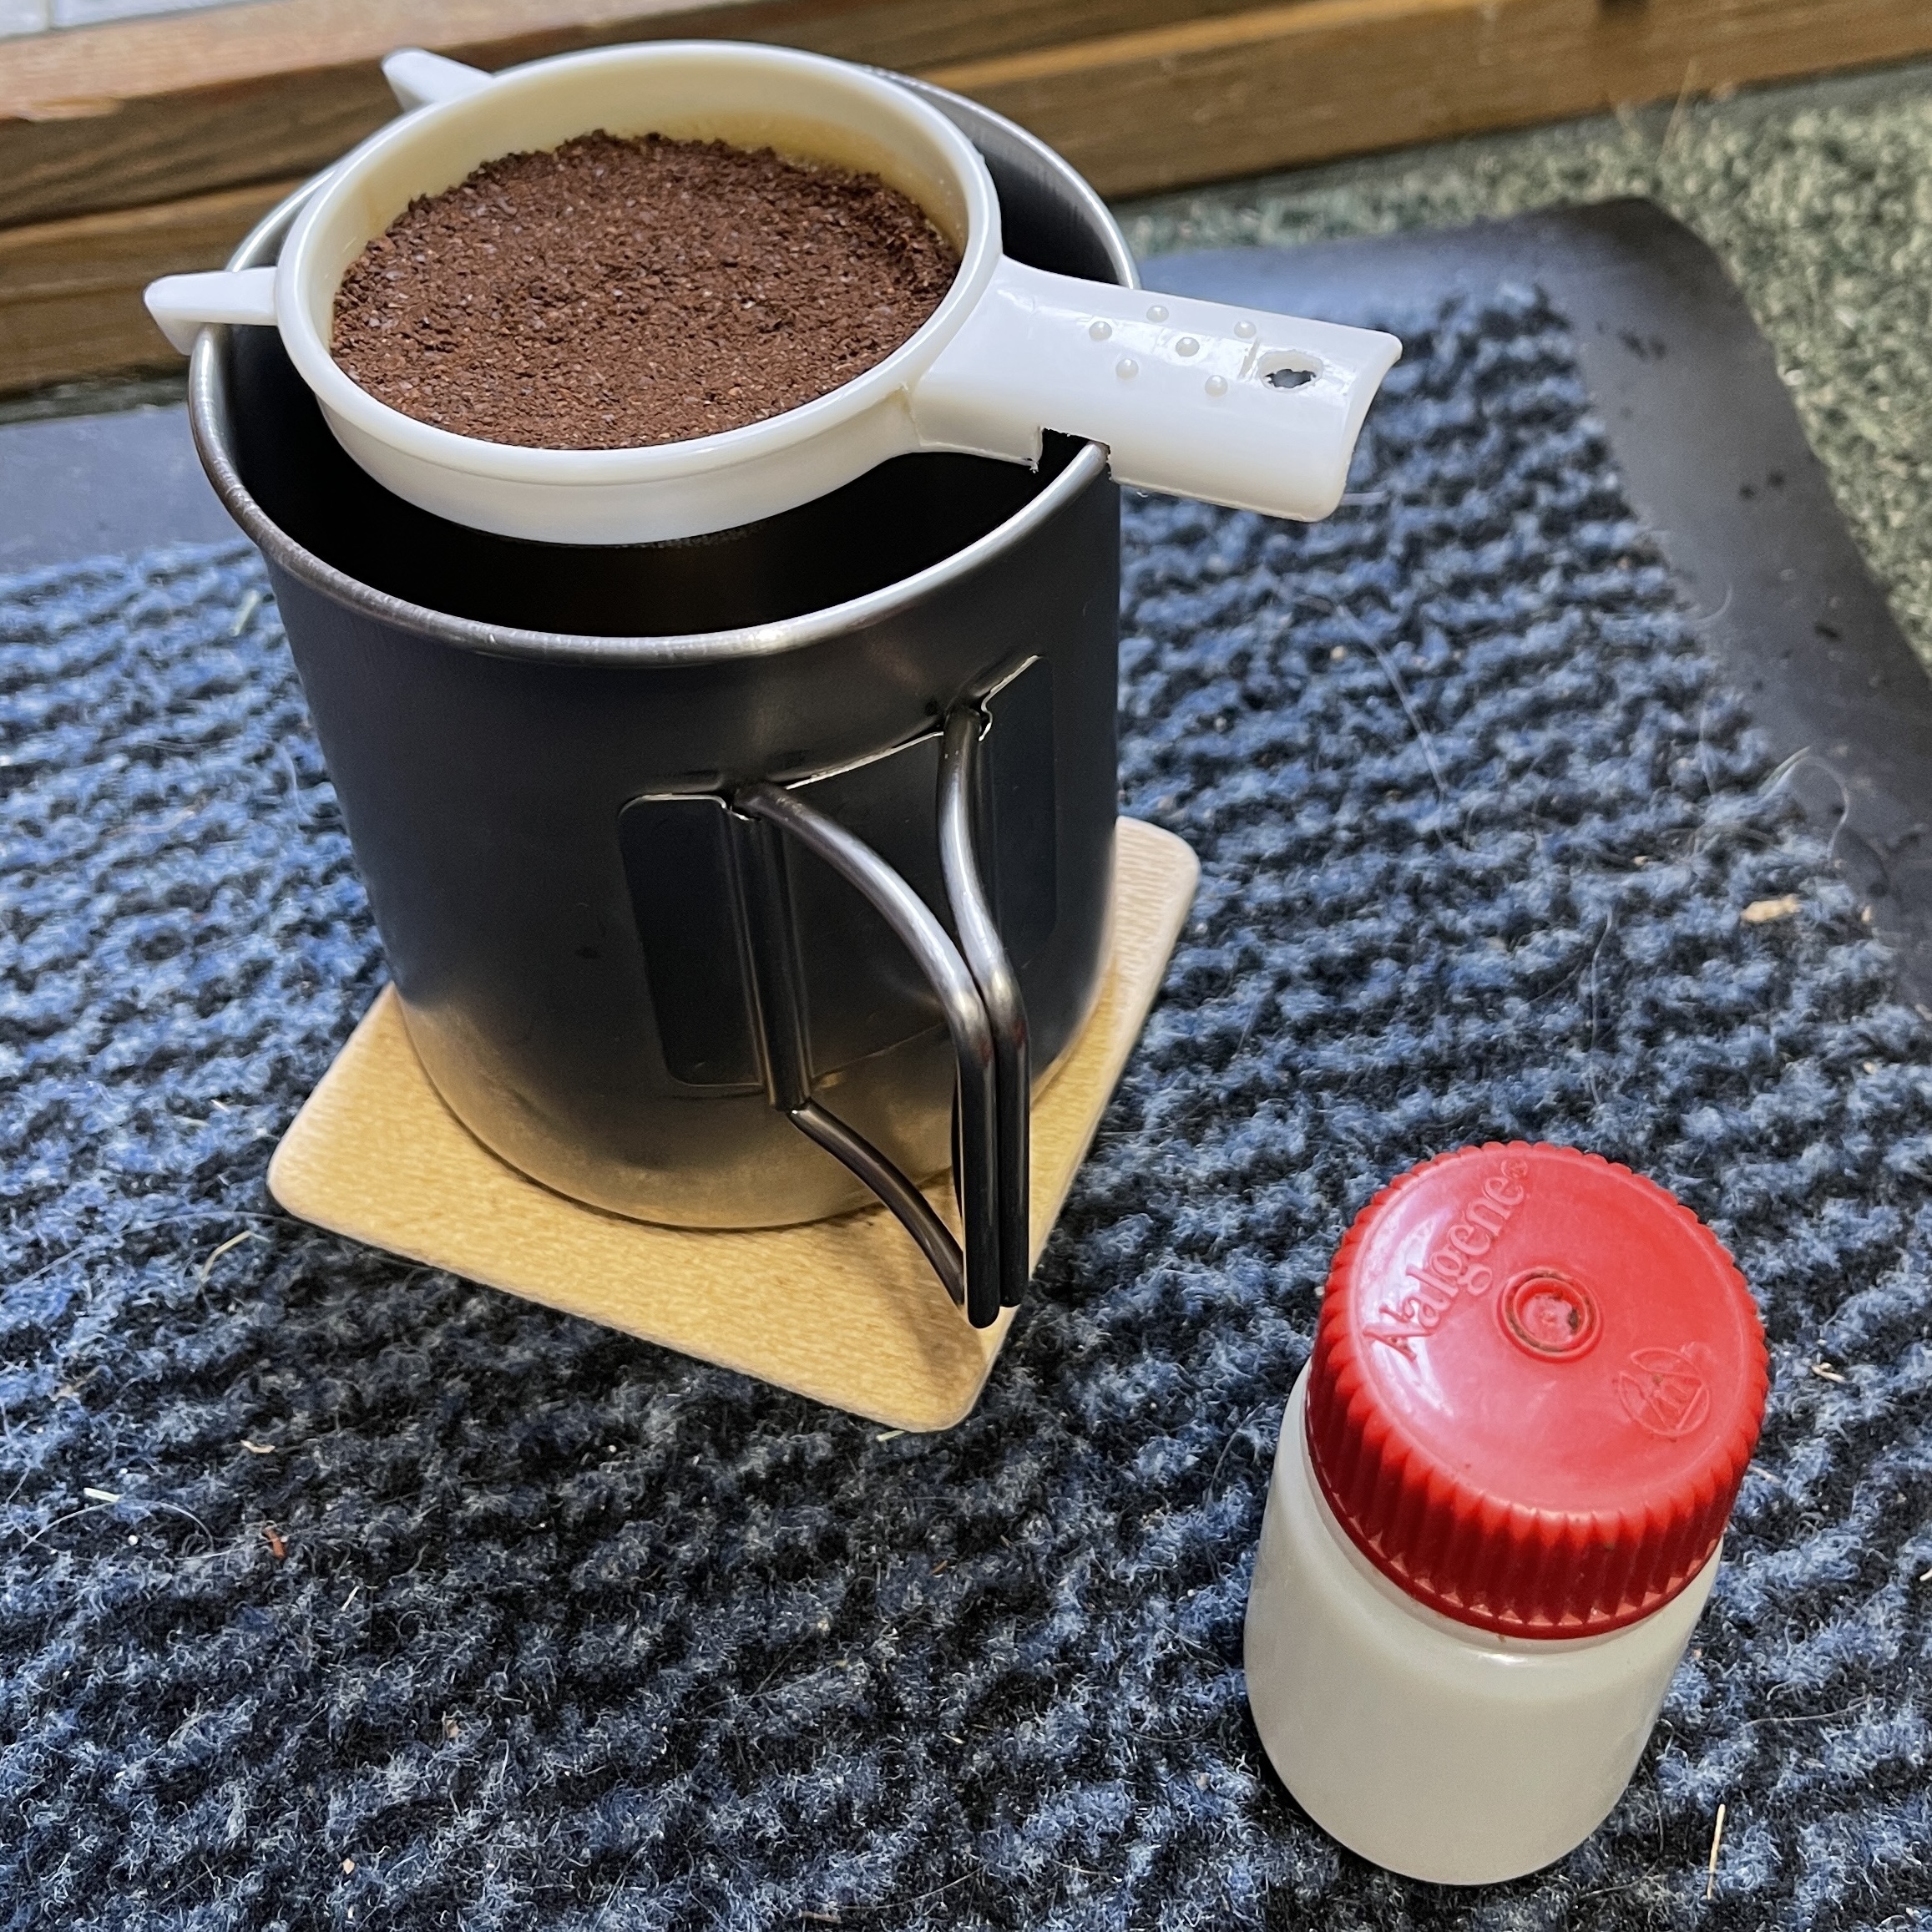 Light and simple bushcraft coffee gear